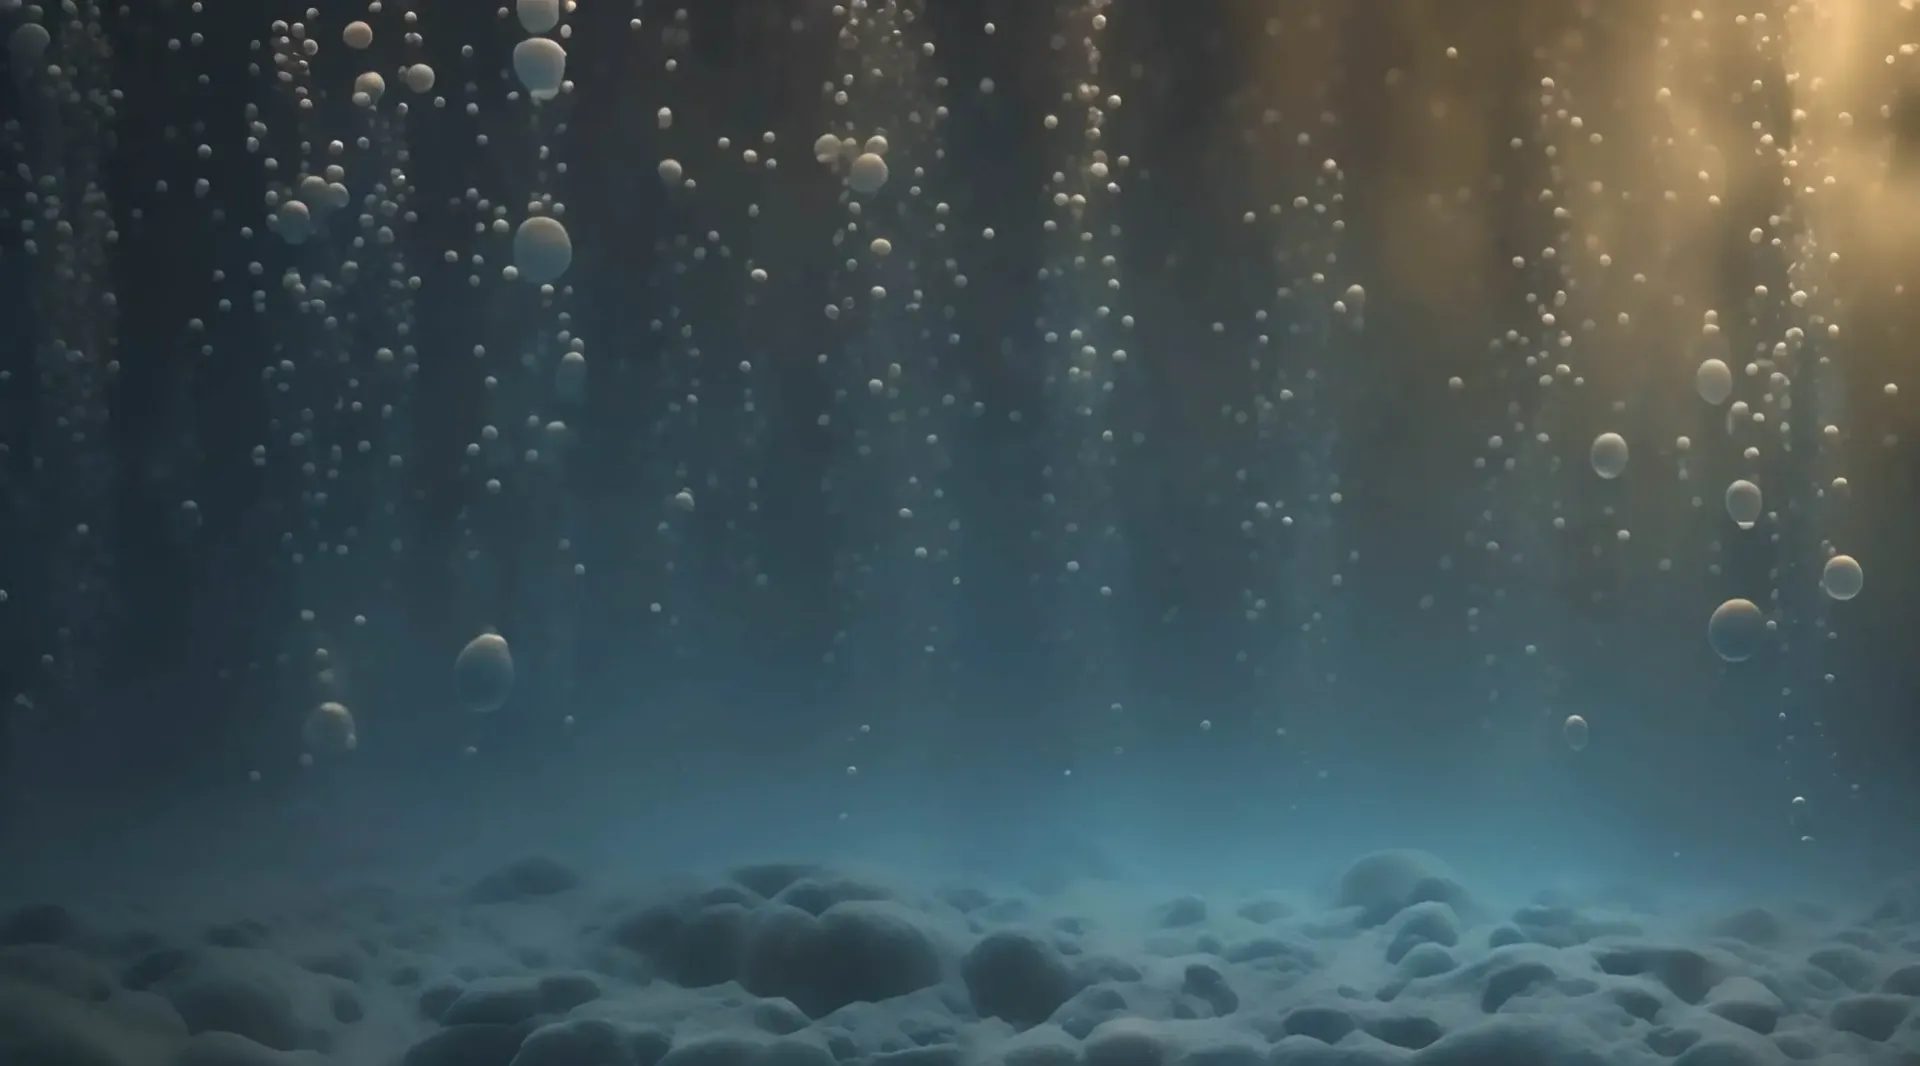 Bubbles underwater background